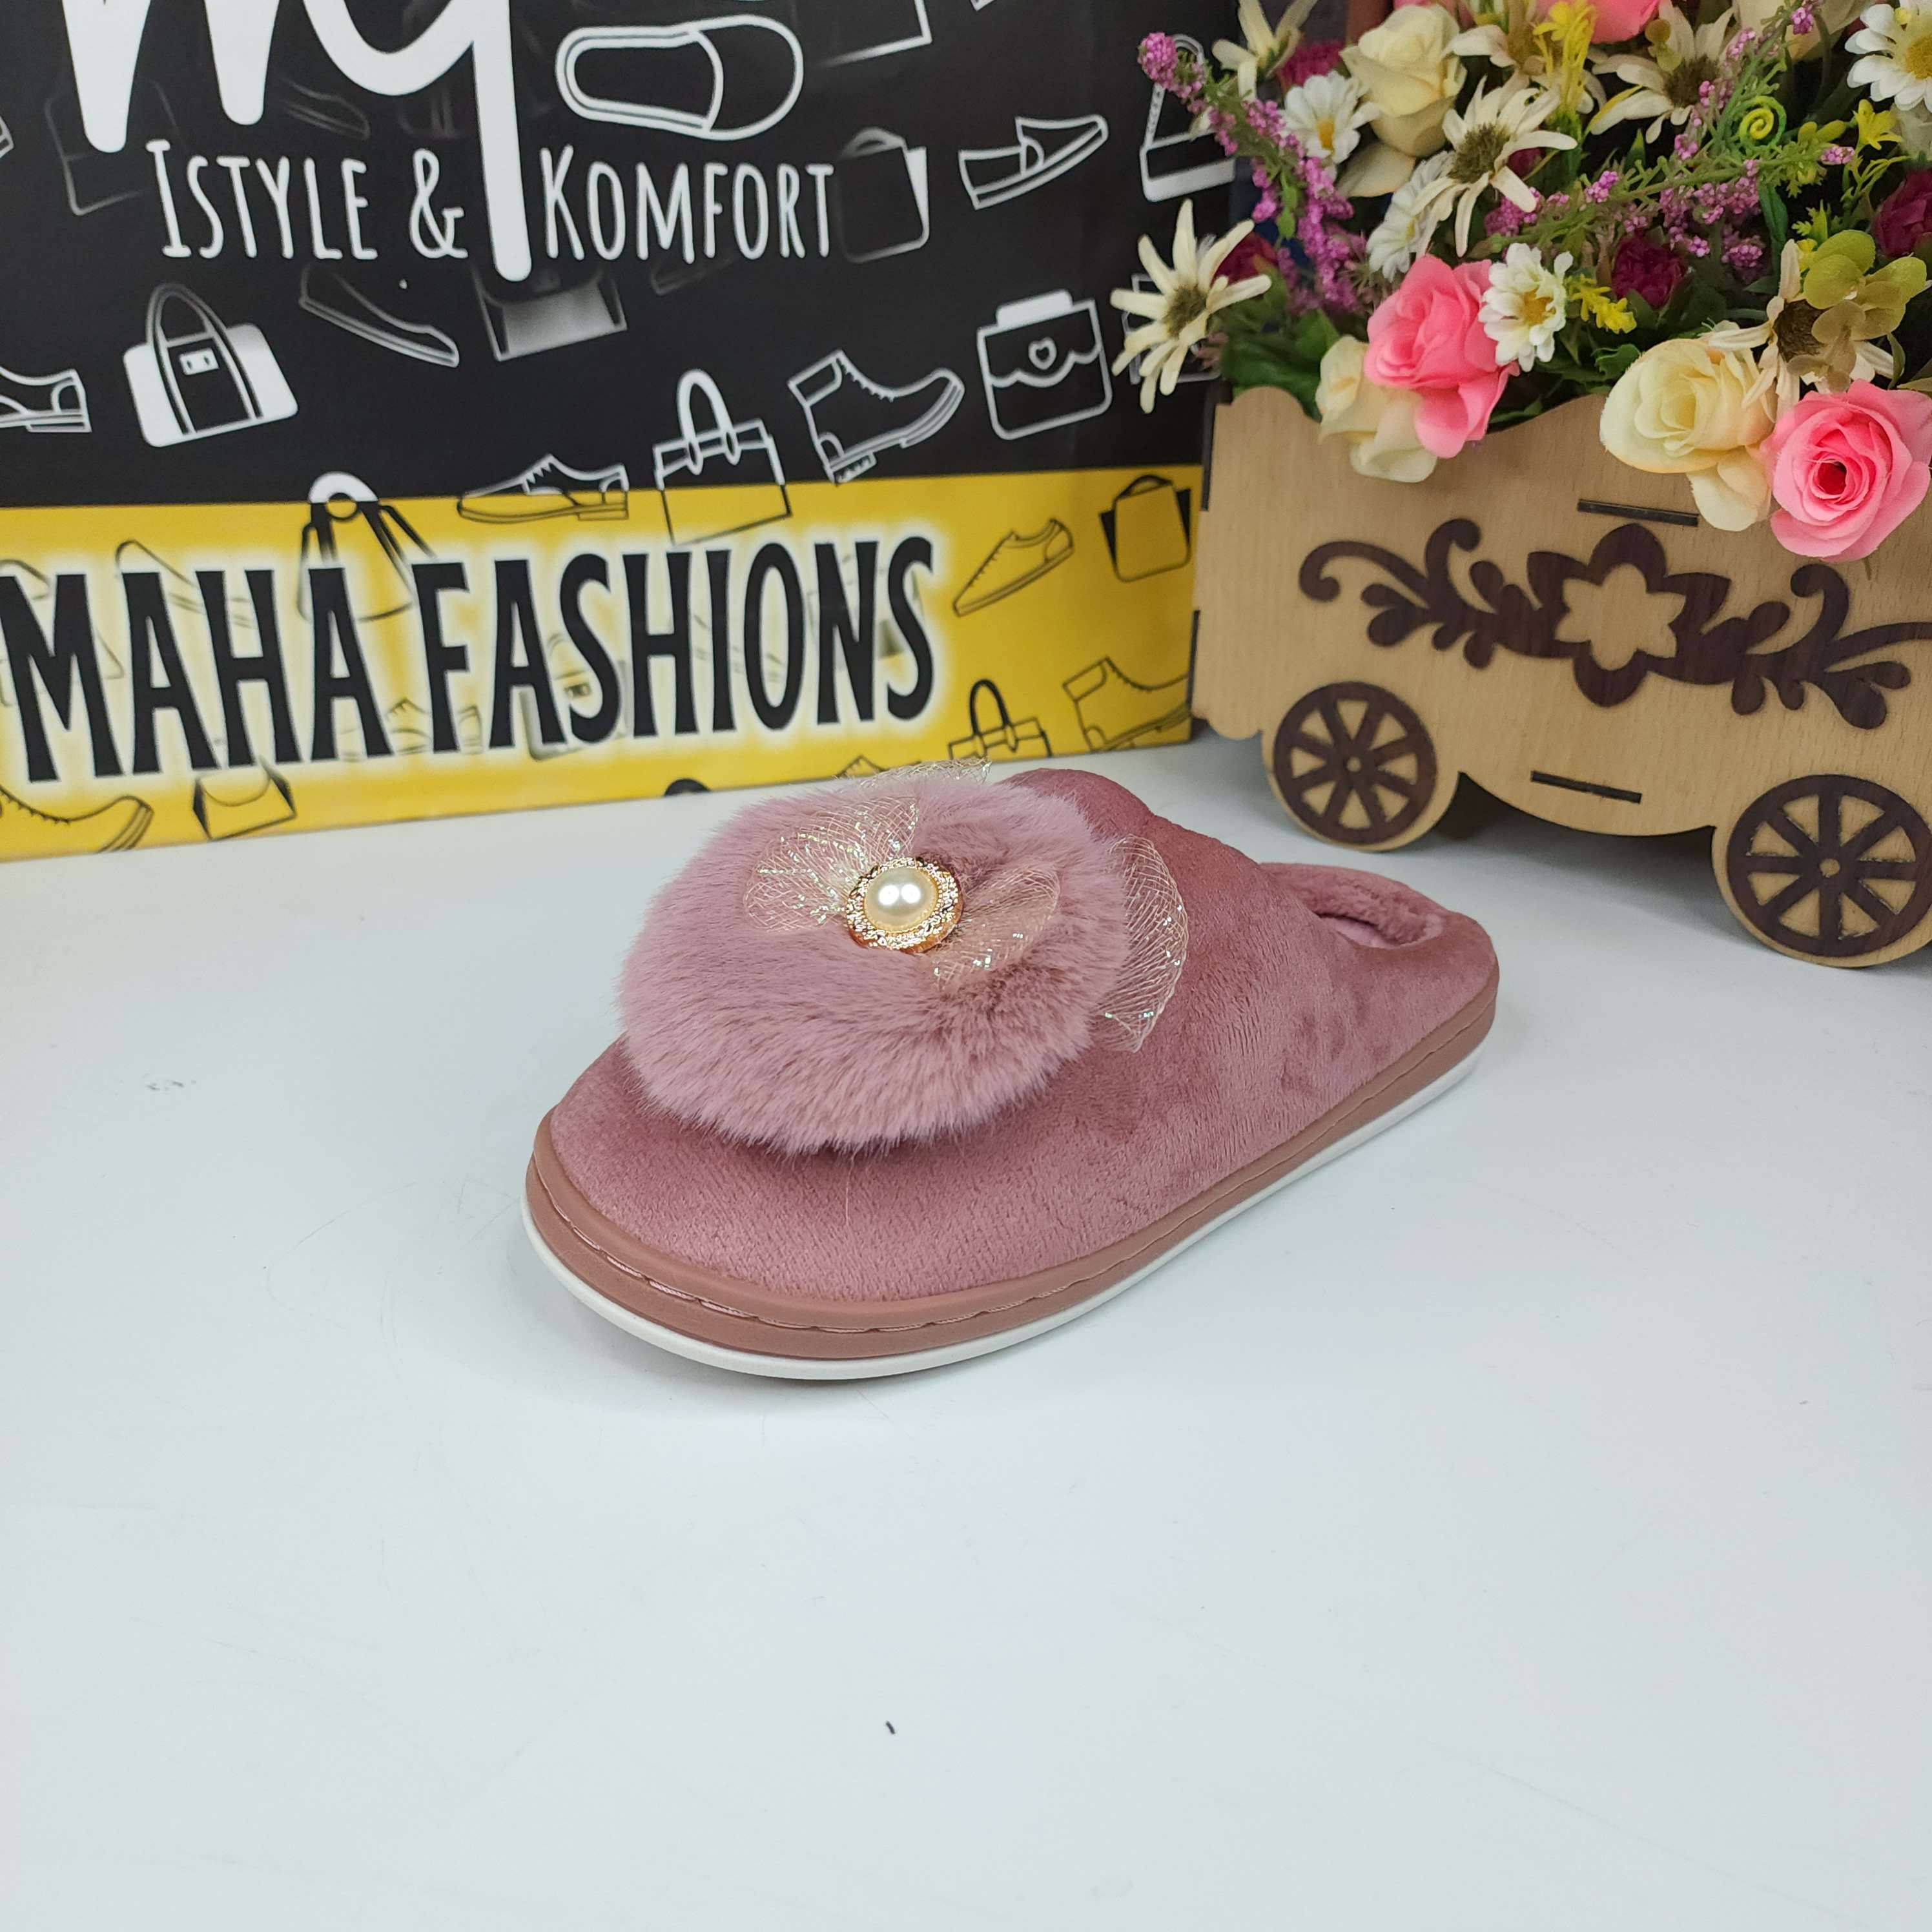 Pink Fur Mules - Maha fashions -  